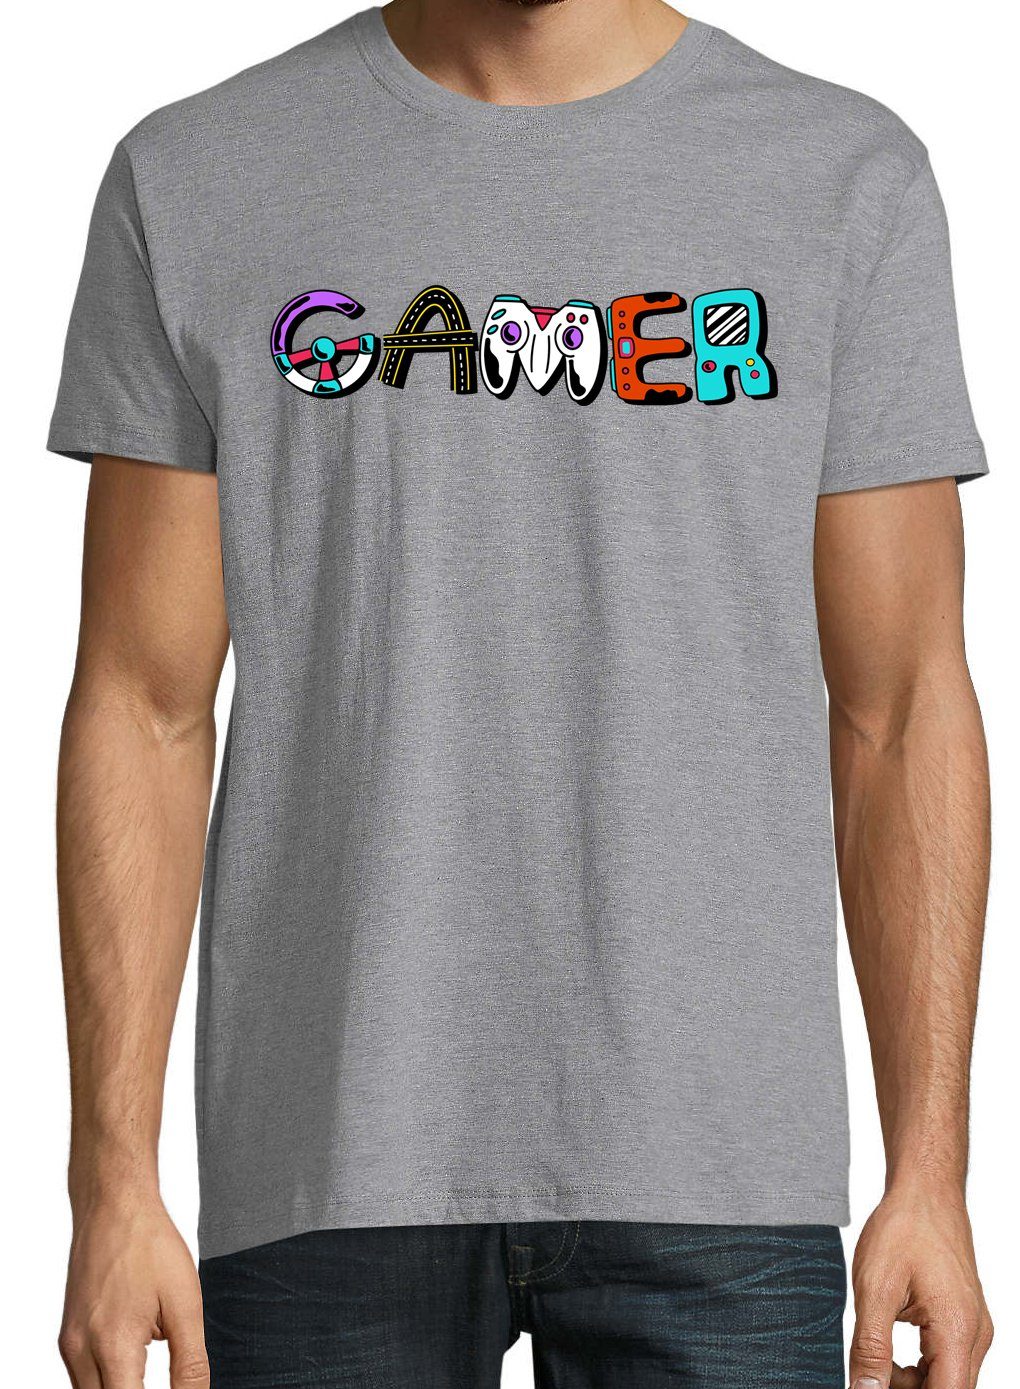 trendigem T-Shirt Herren Youth Gamer Frontprint mit Grau Designz Shirt